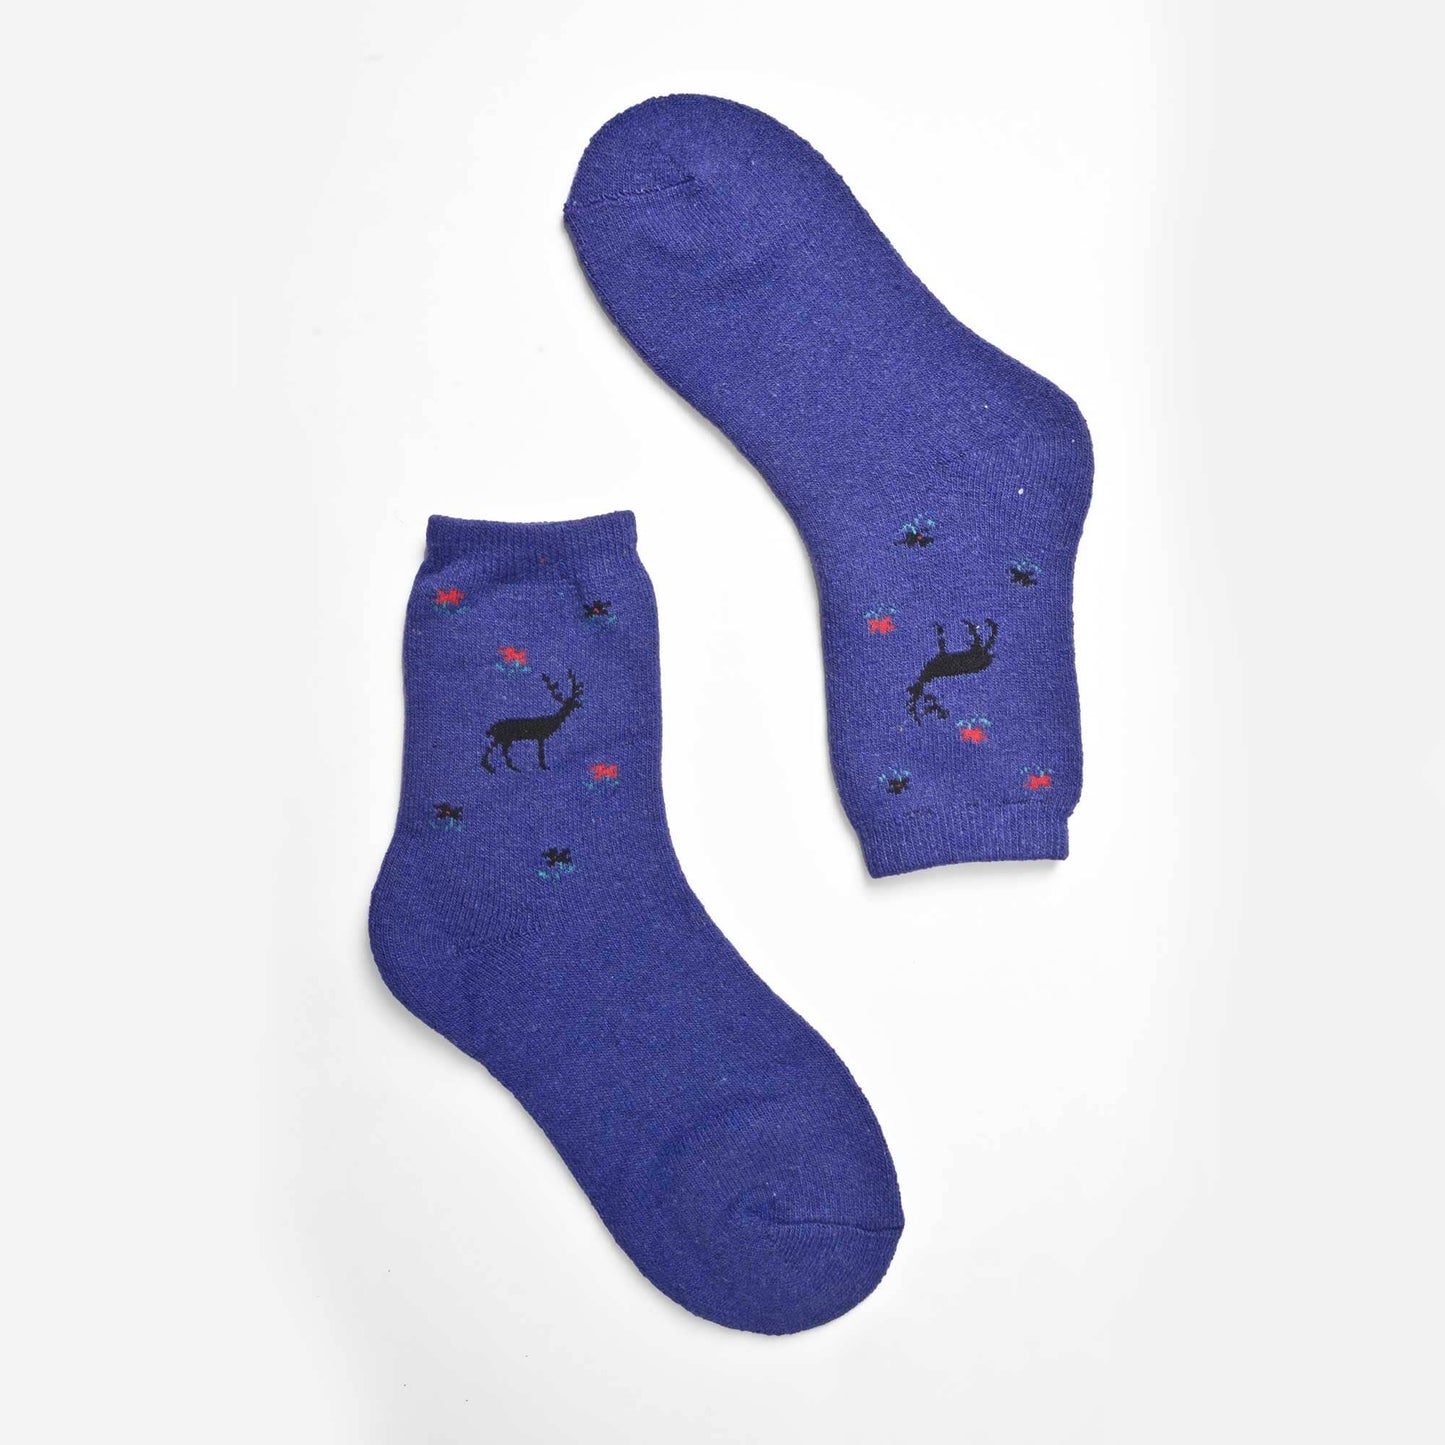 Tazoo Men's Deer Printed Crew Socks Socks SRL D7 EUR 36-41 